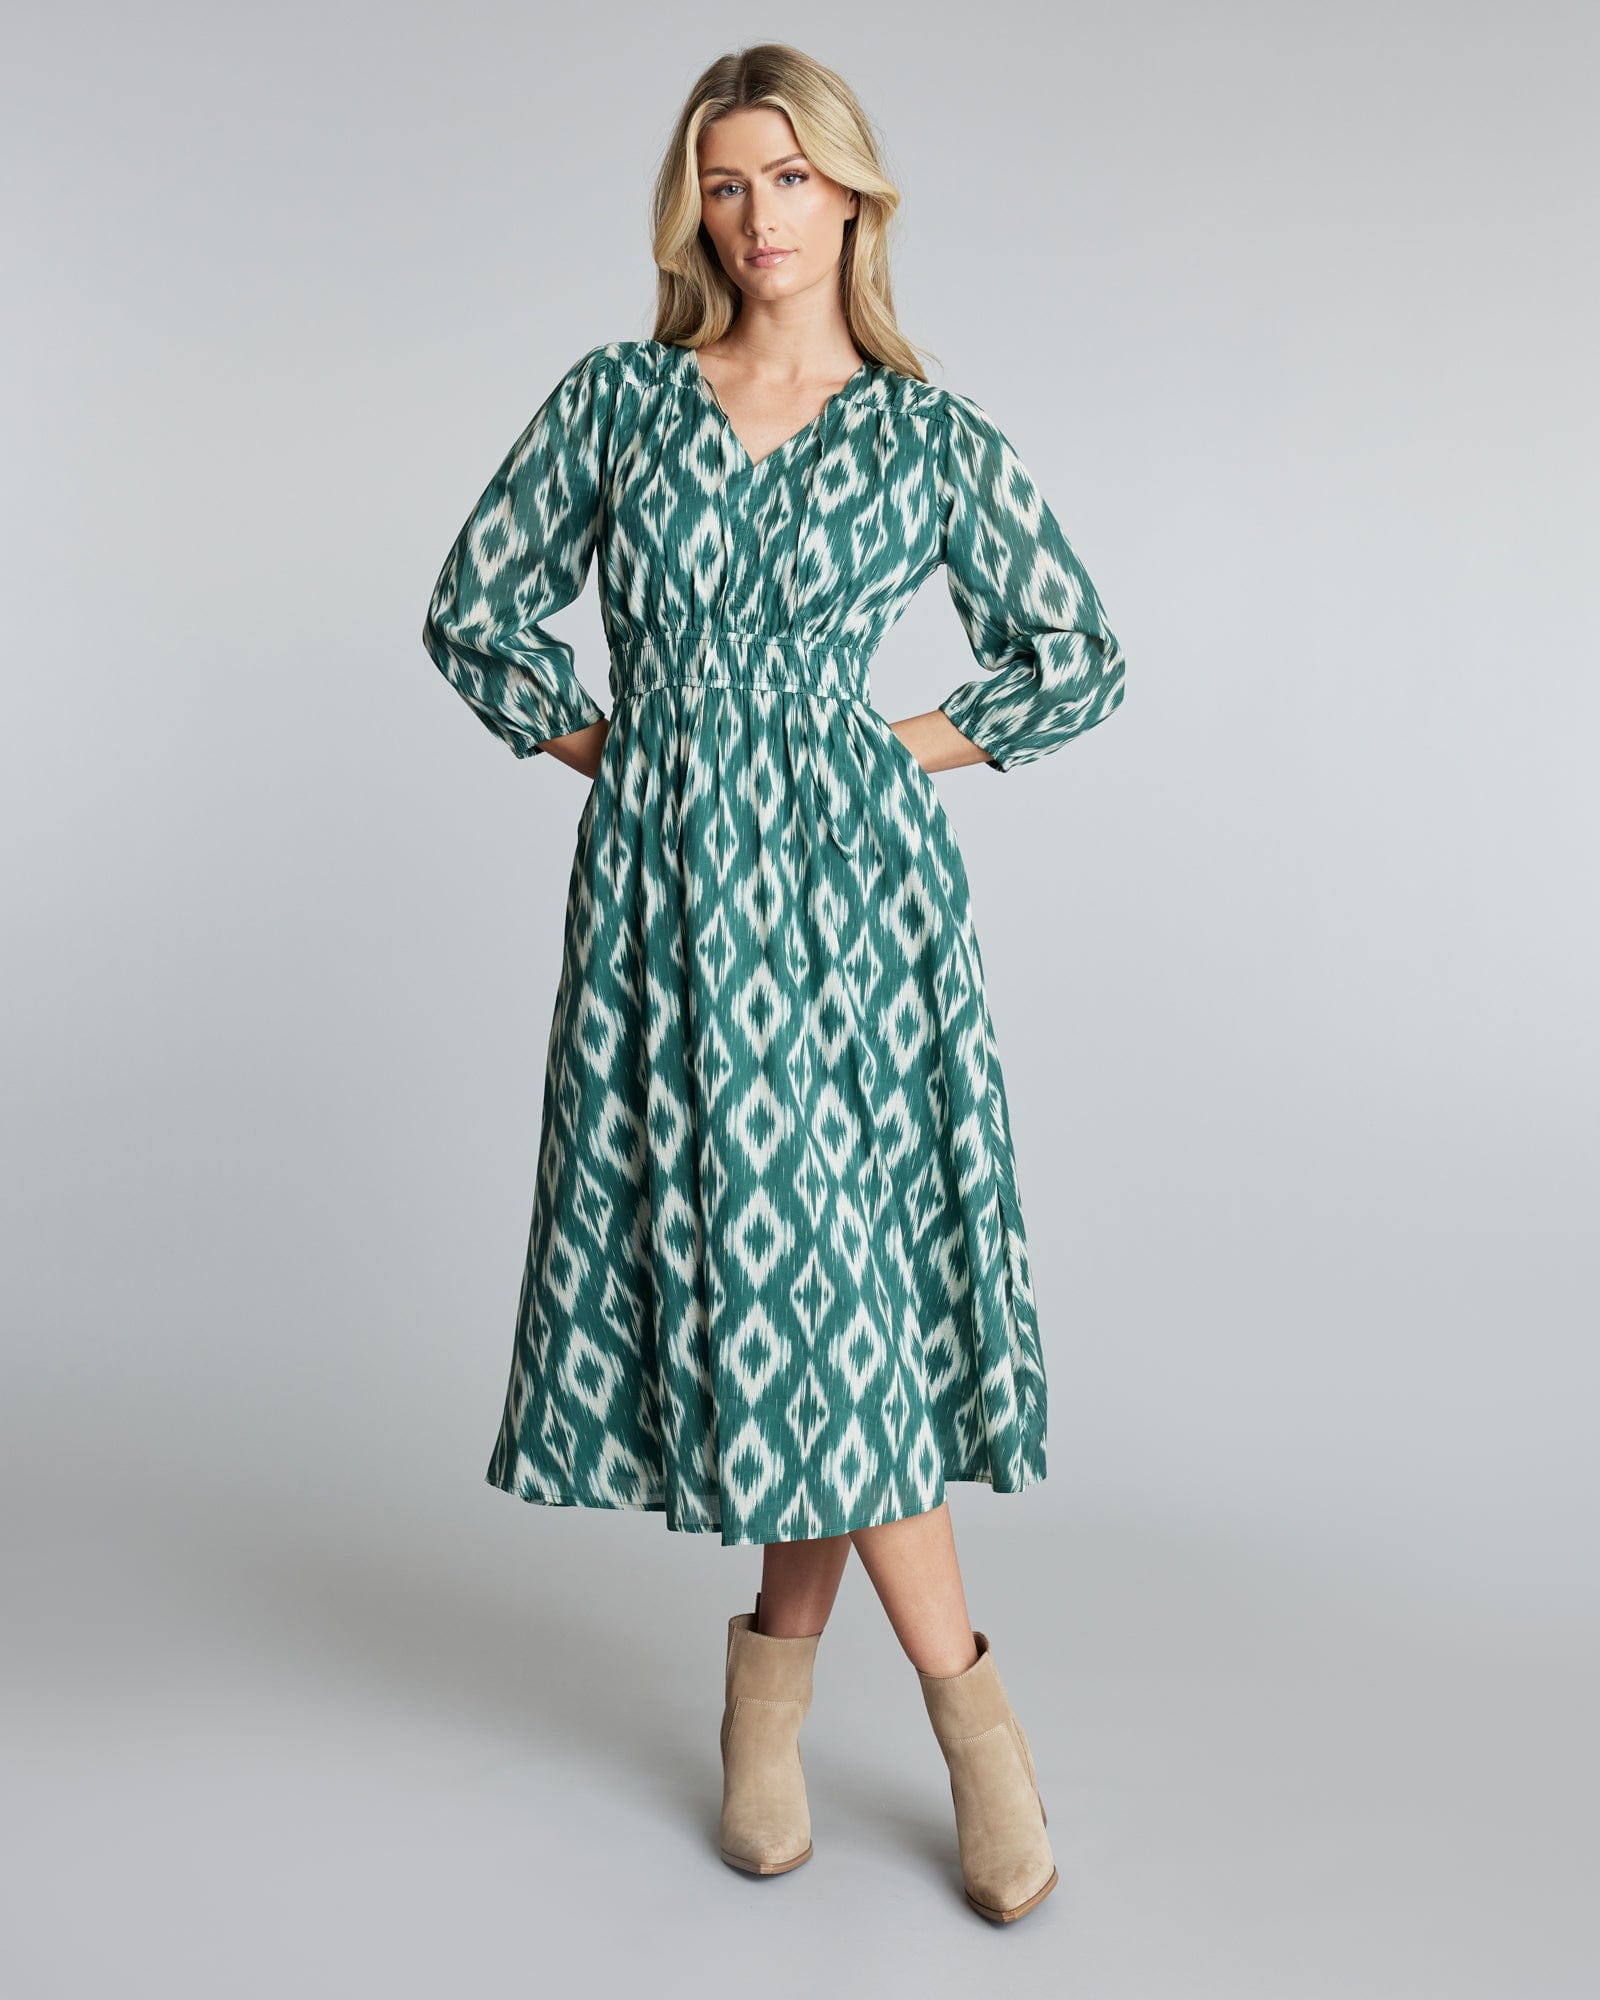 Woman wearing a green geometric print dress